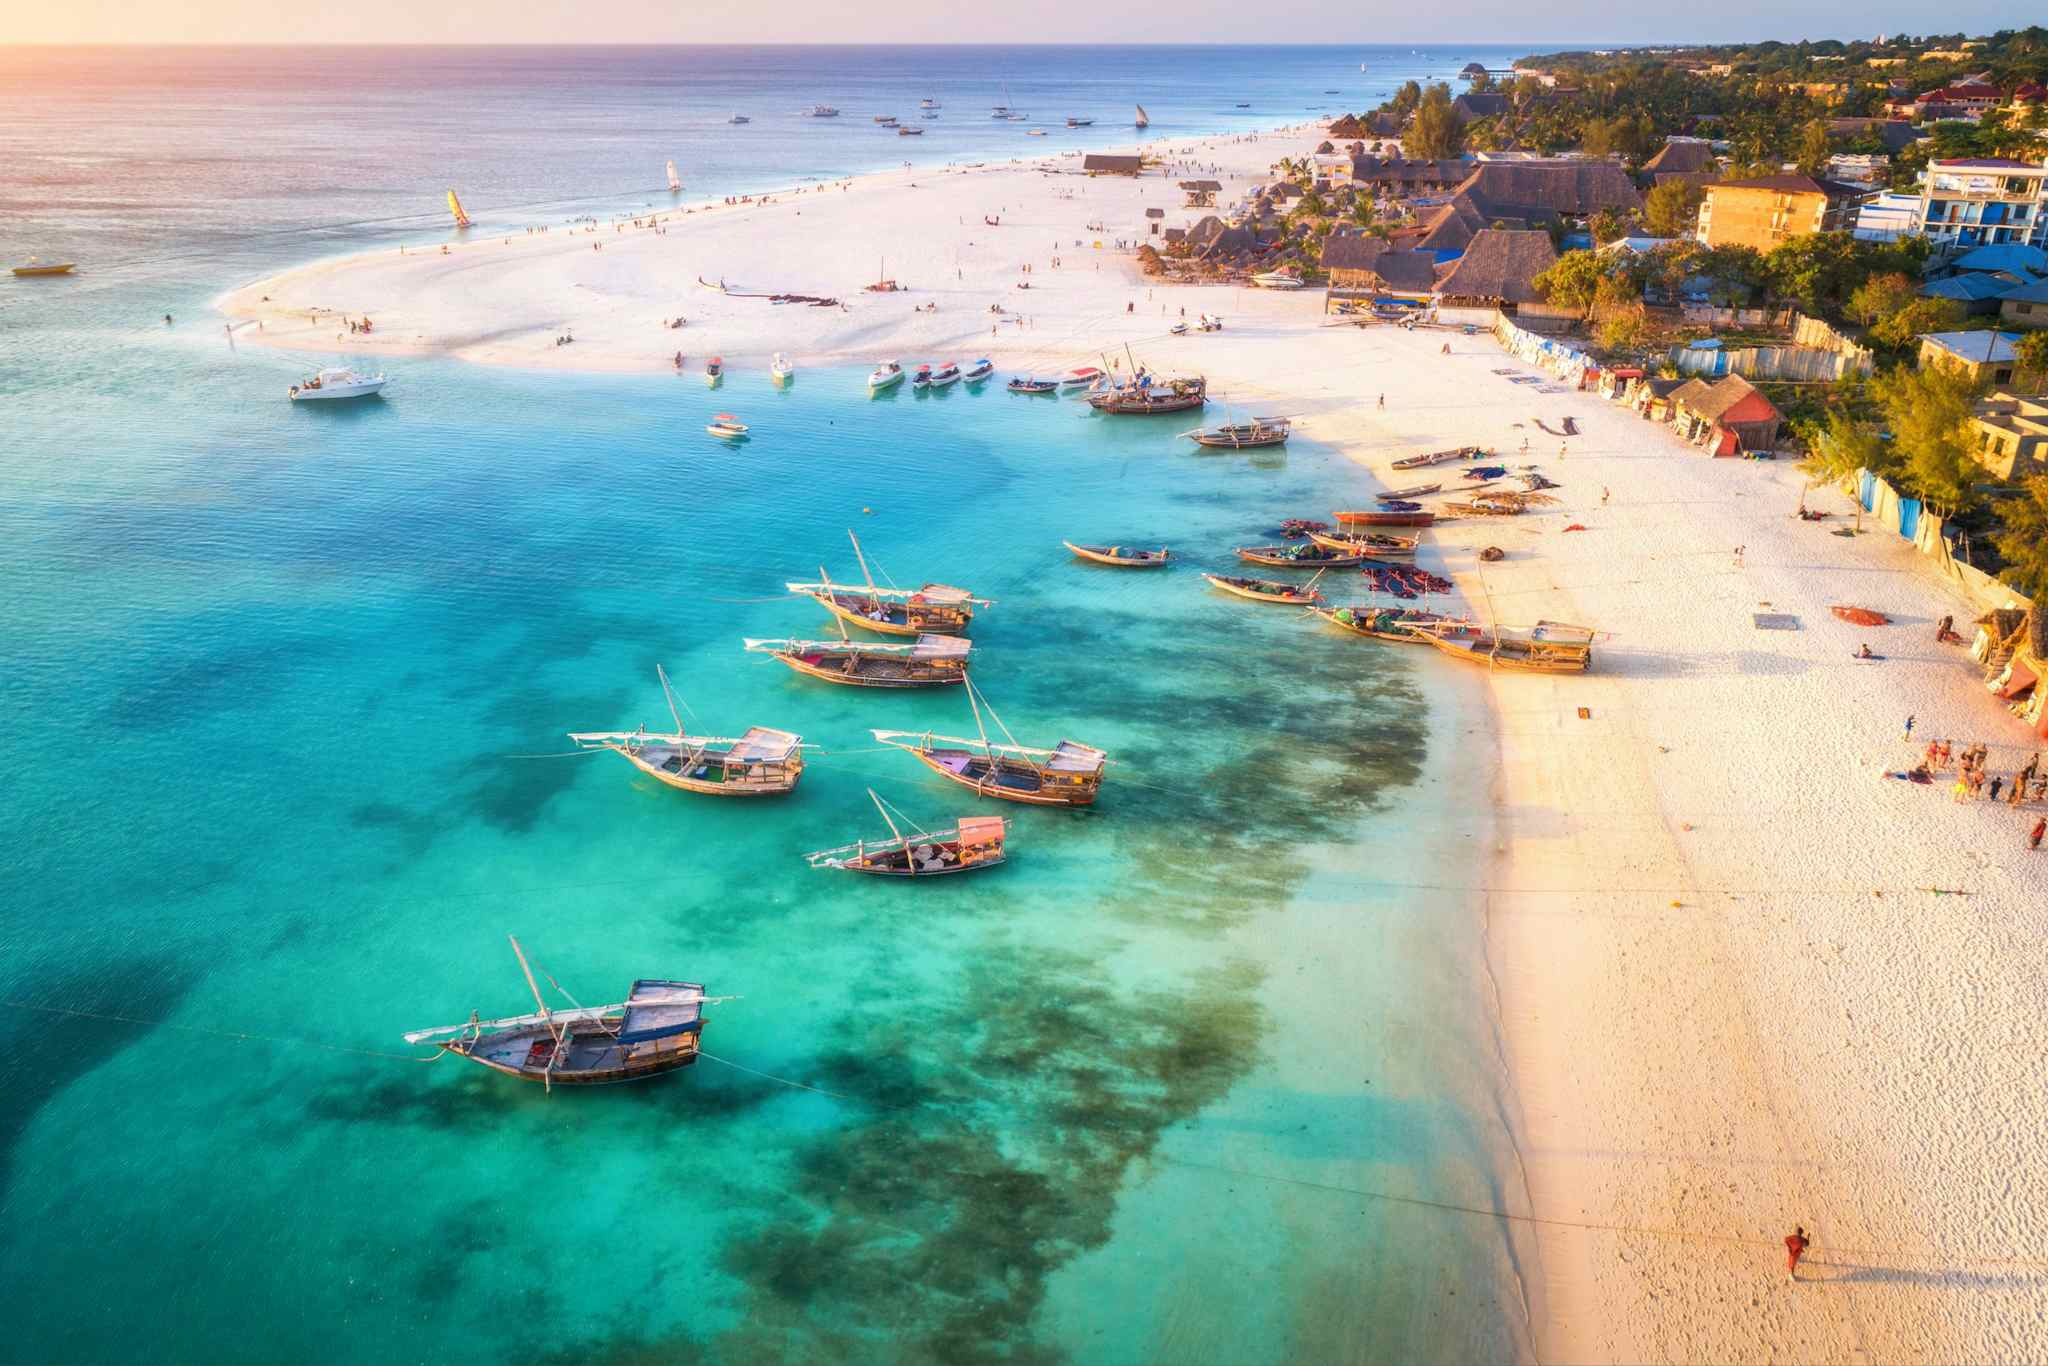 Aerial view of fishing boats by a sandy beach on the Indian Ocean, Zanzibar, Tanzania.